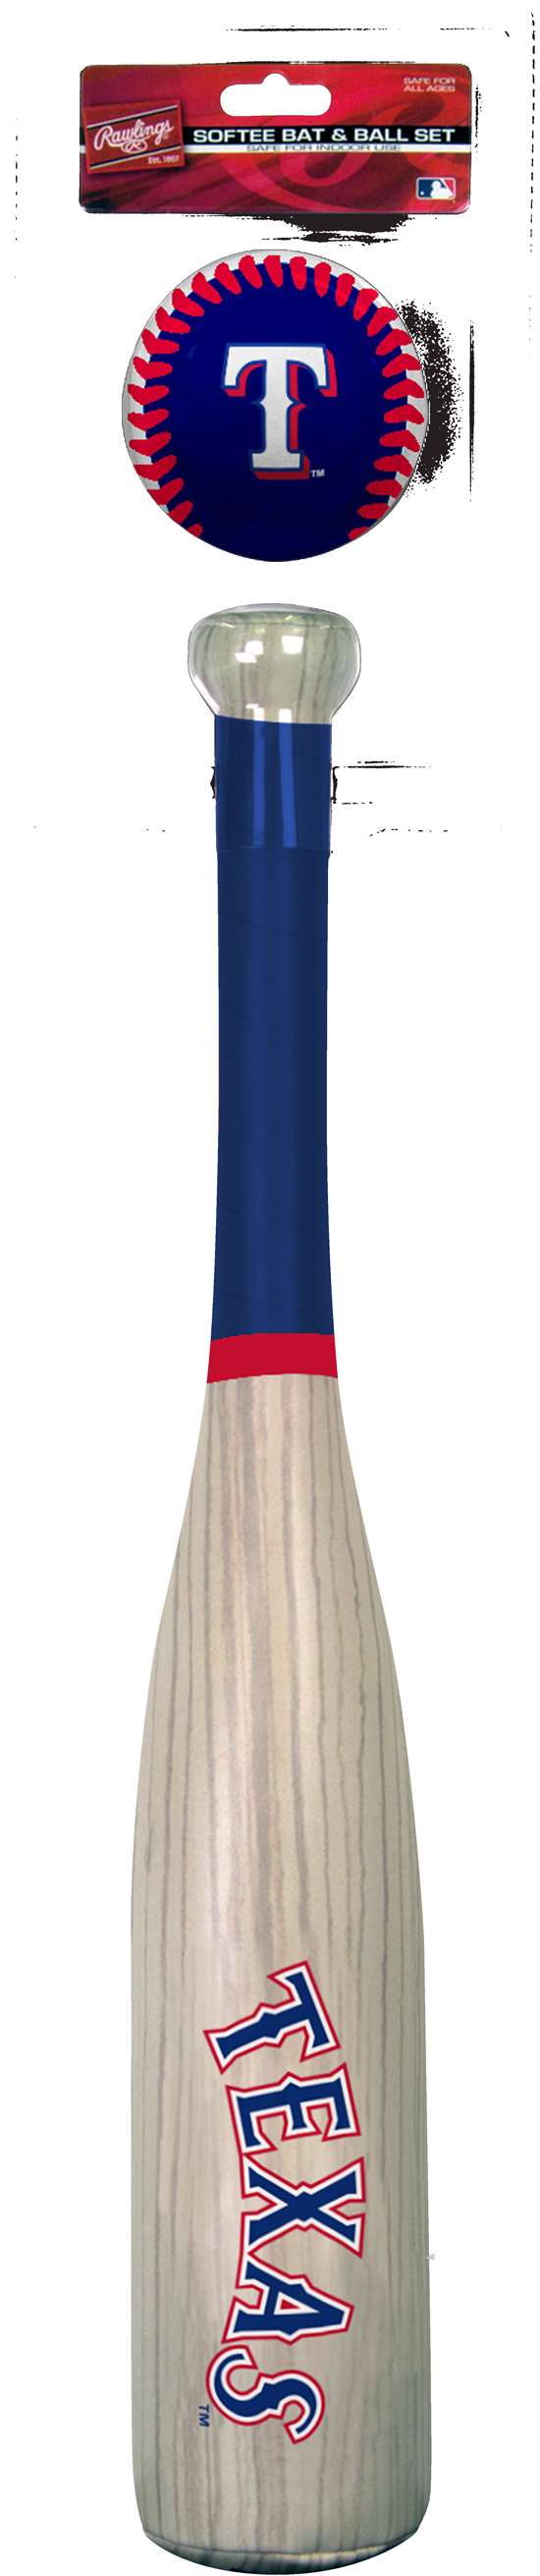 MLB Texas Rangers Grand Slam Softee Baseball Bat and Ball Set (Wood Grain)